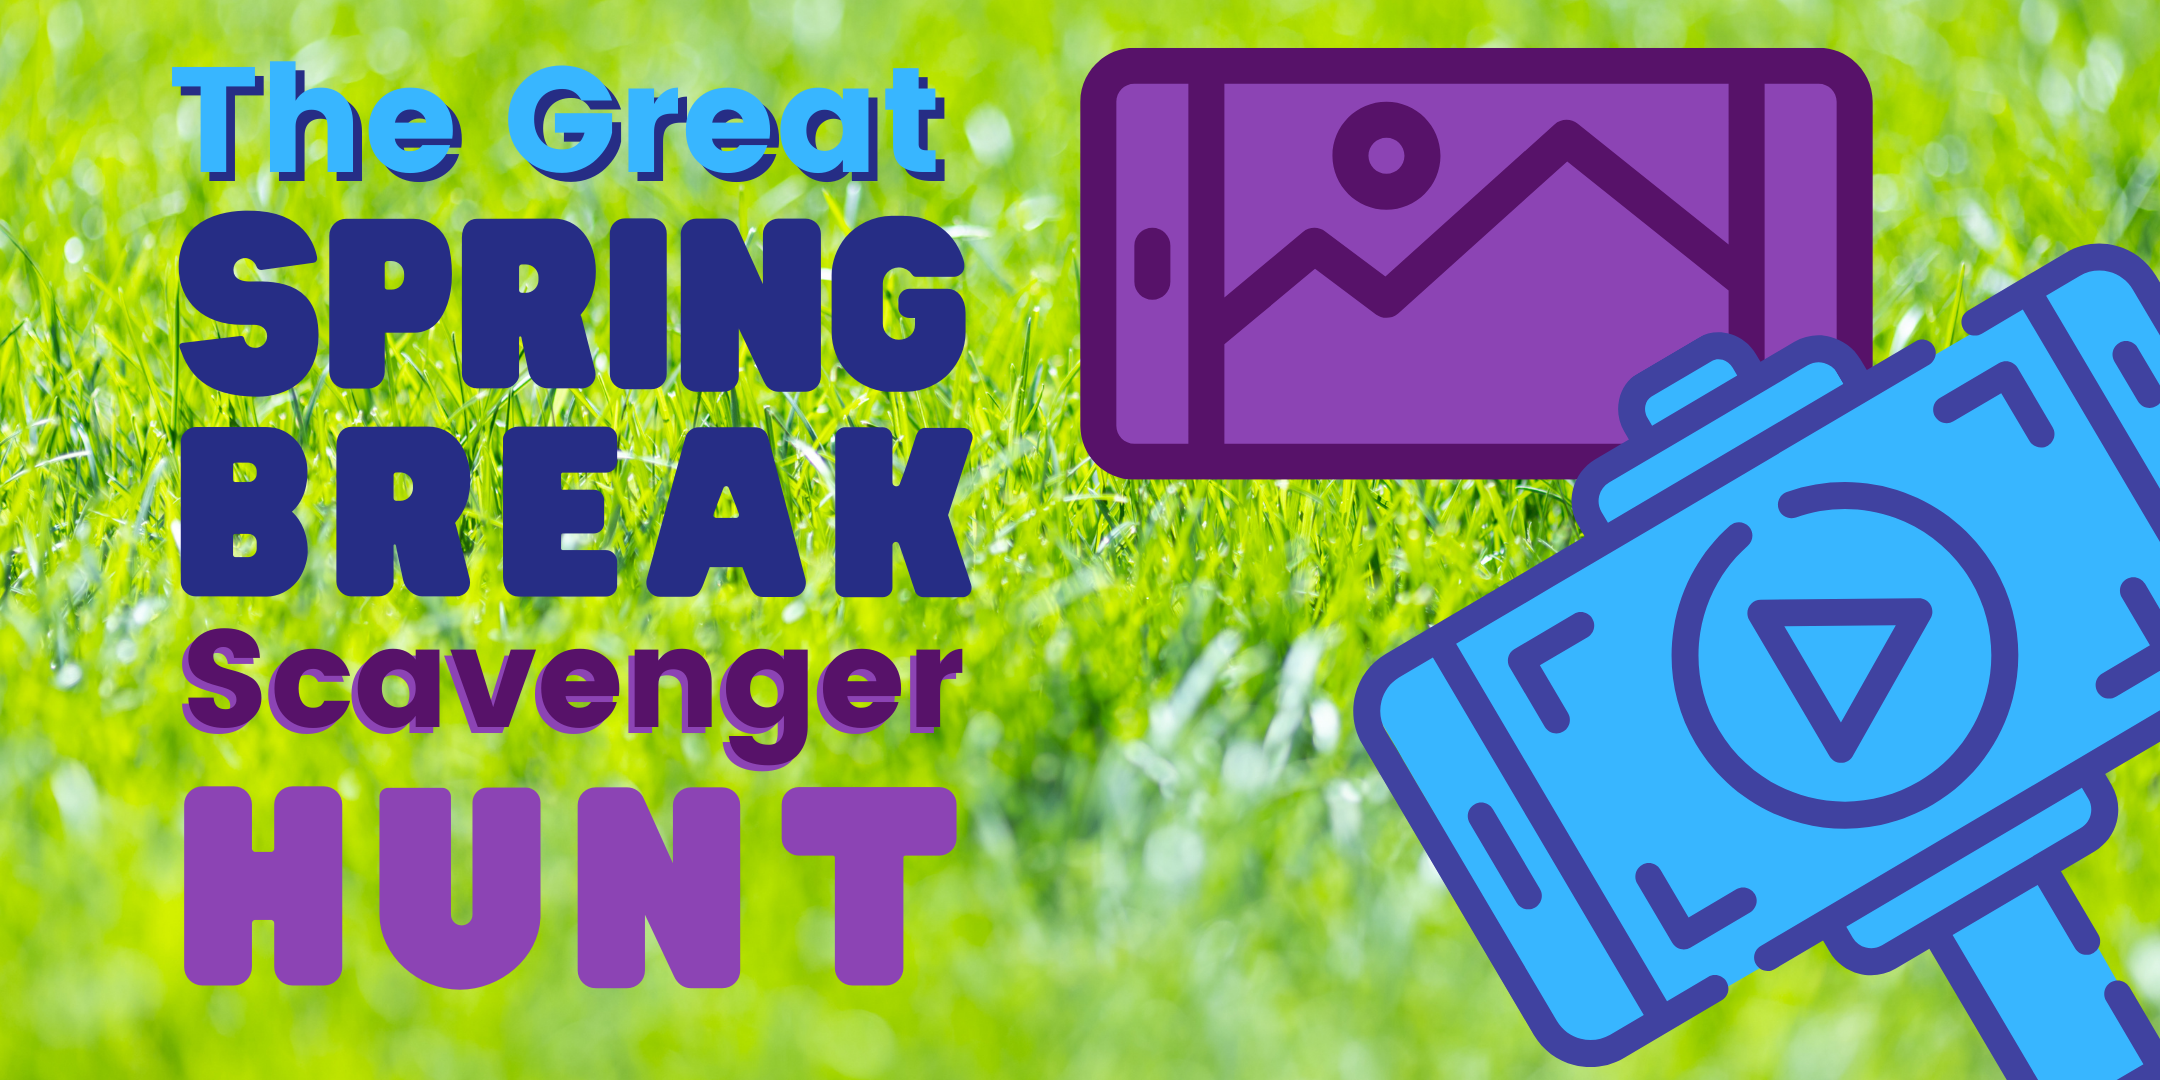 The Great Spring Break Scavenger Hunt image